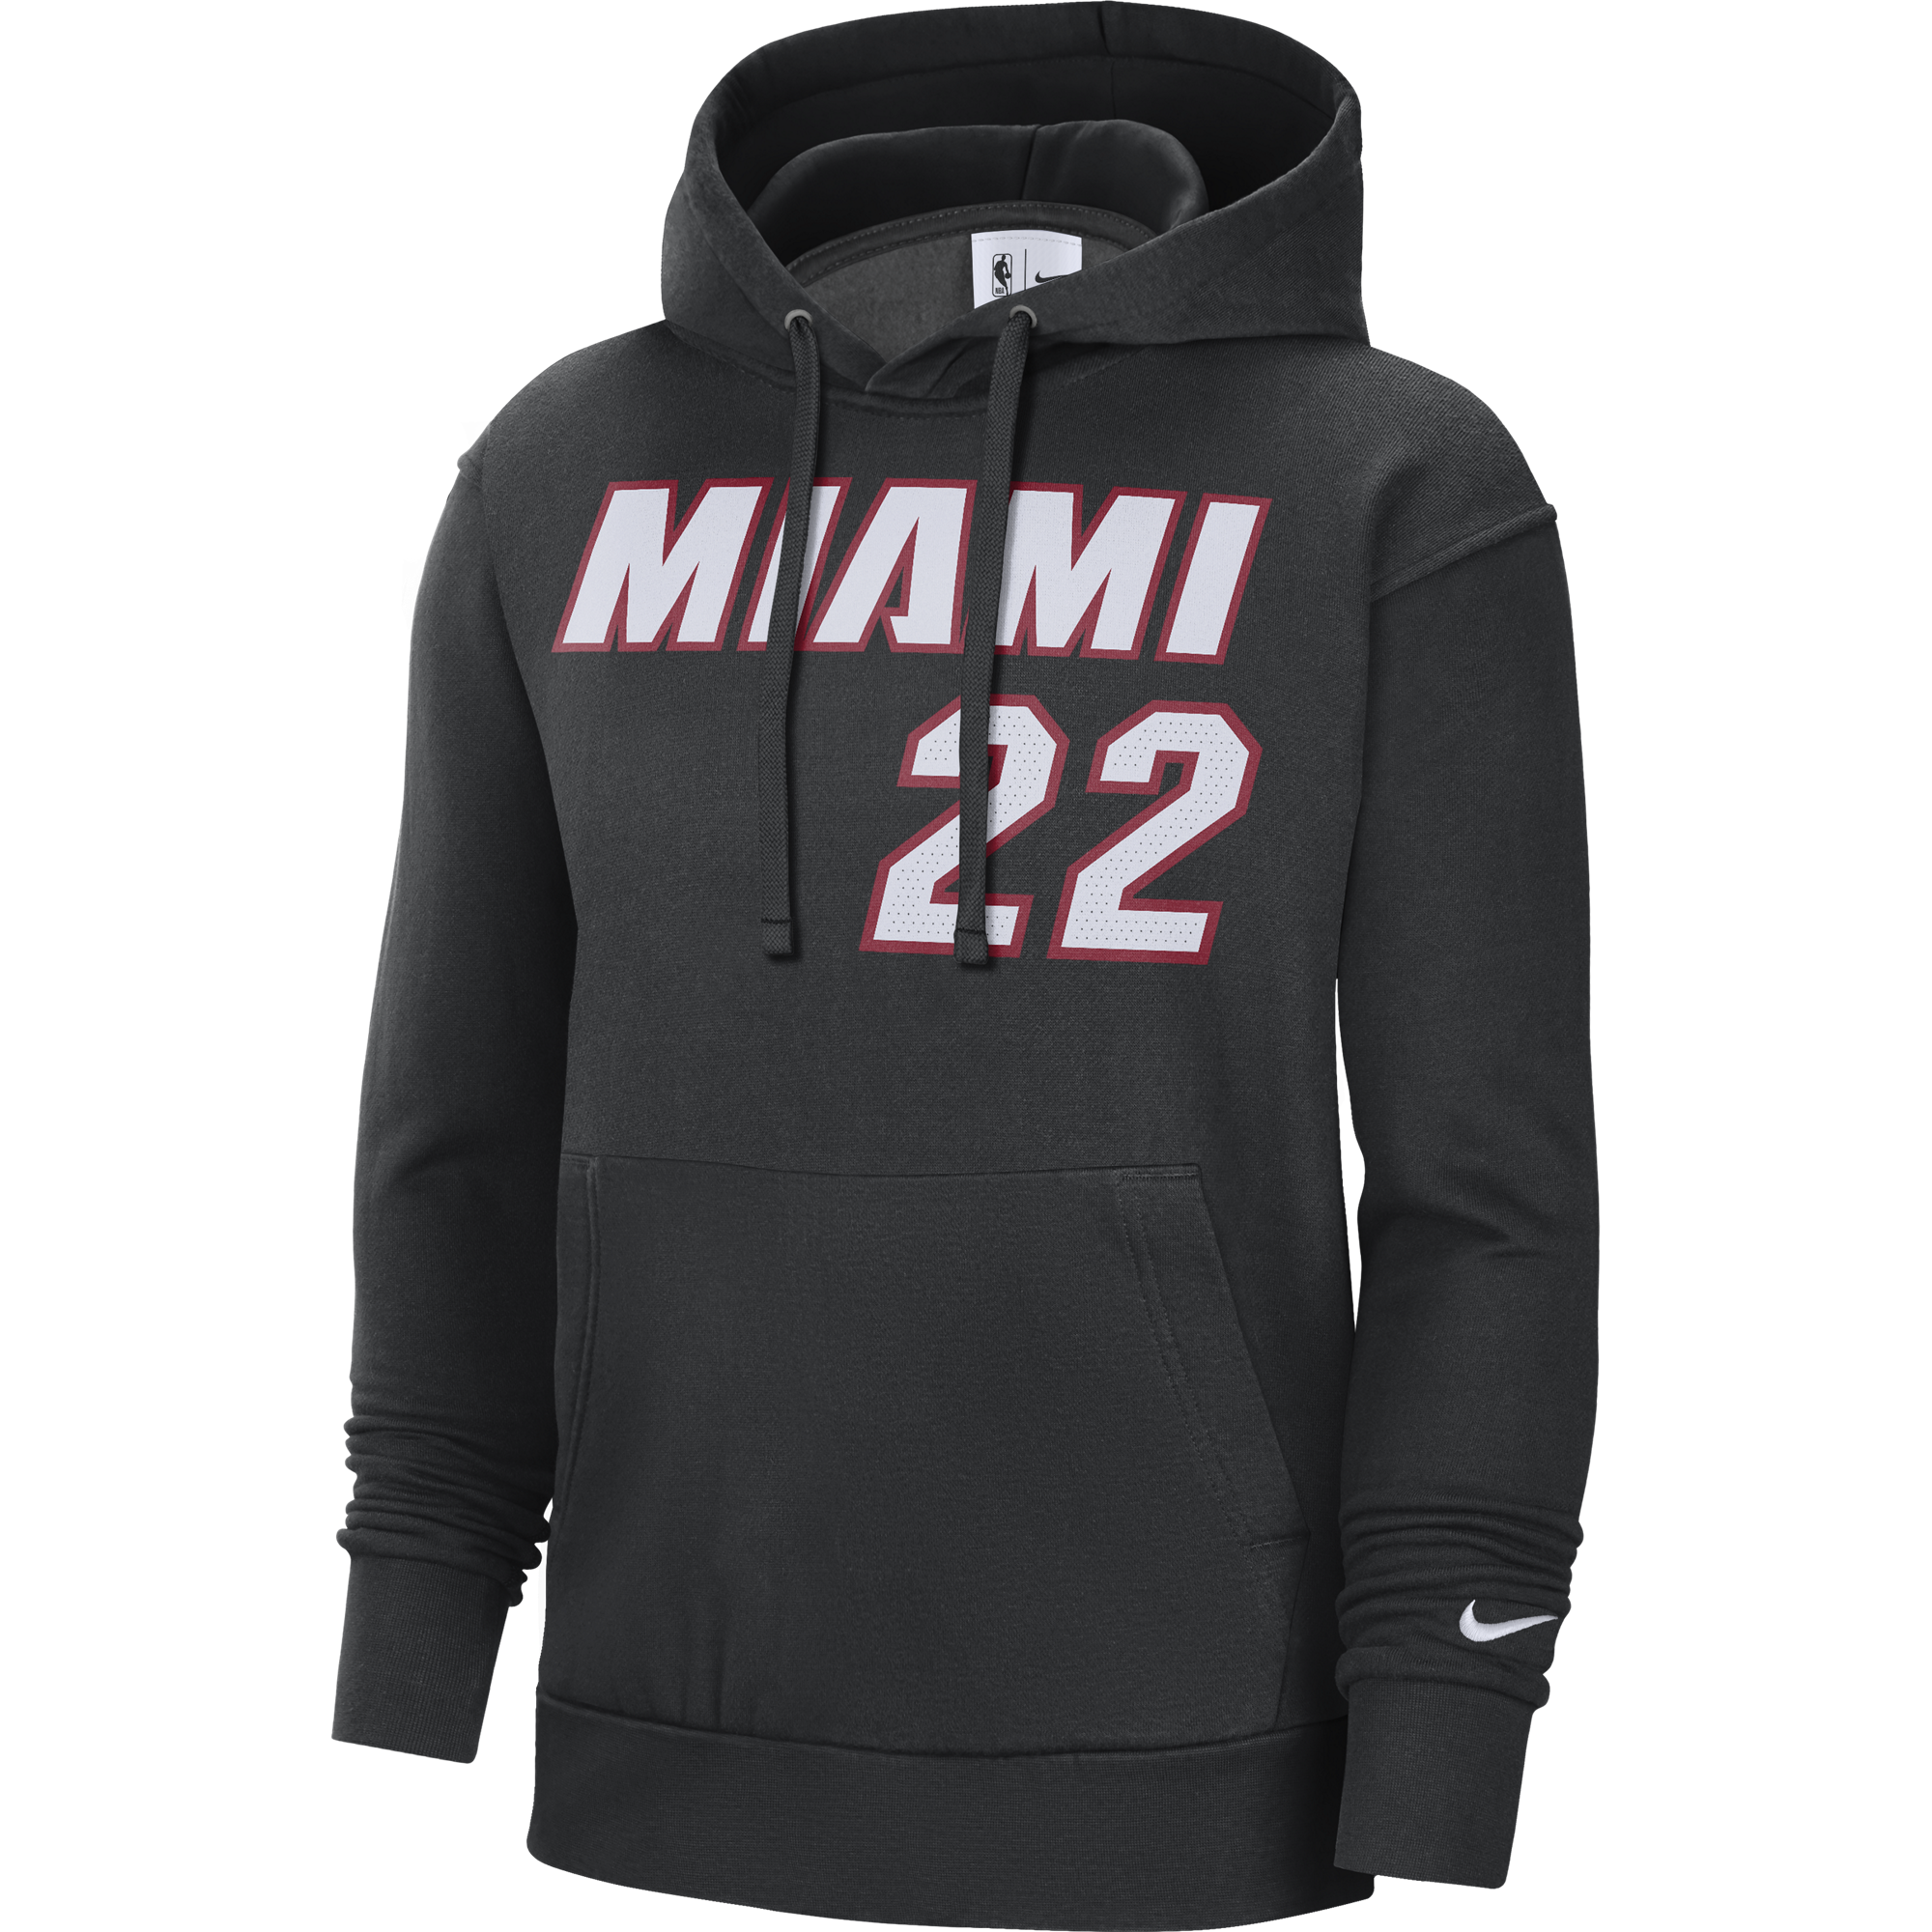 Miami Heat Nike Icon Edition Swingman Jersey 22/23 - Black - Jimmy Butler -  Unisex